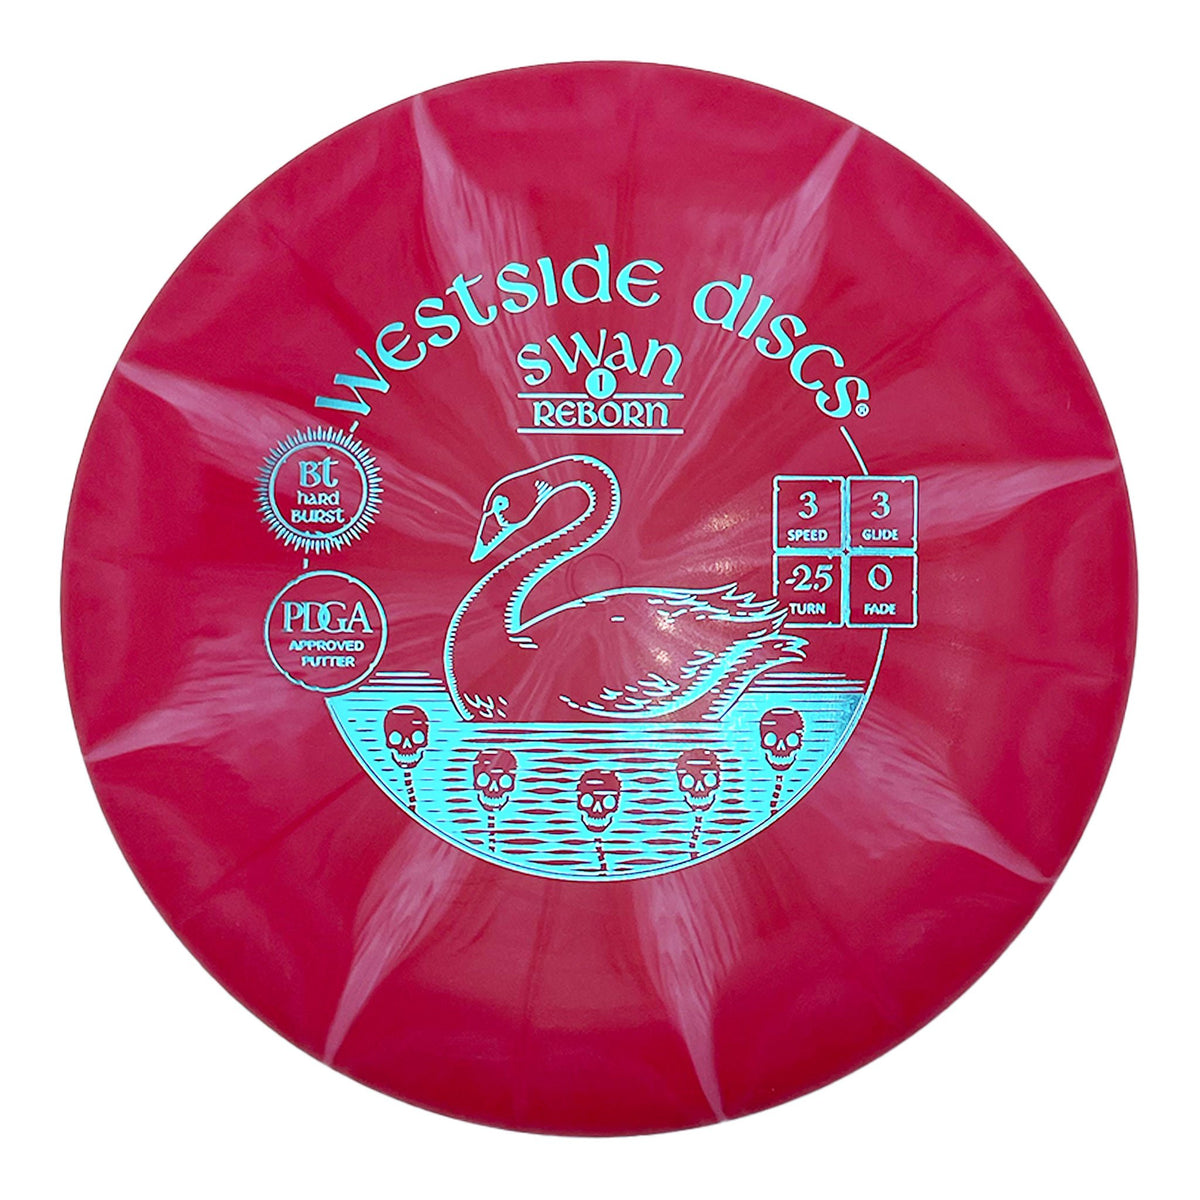 Westside Discs BT Hard Burst Swan putter and approach - Red